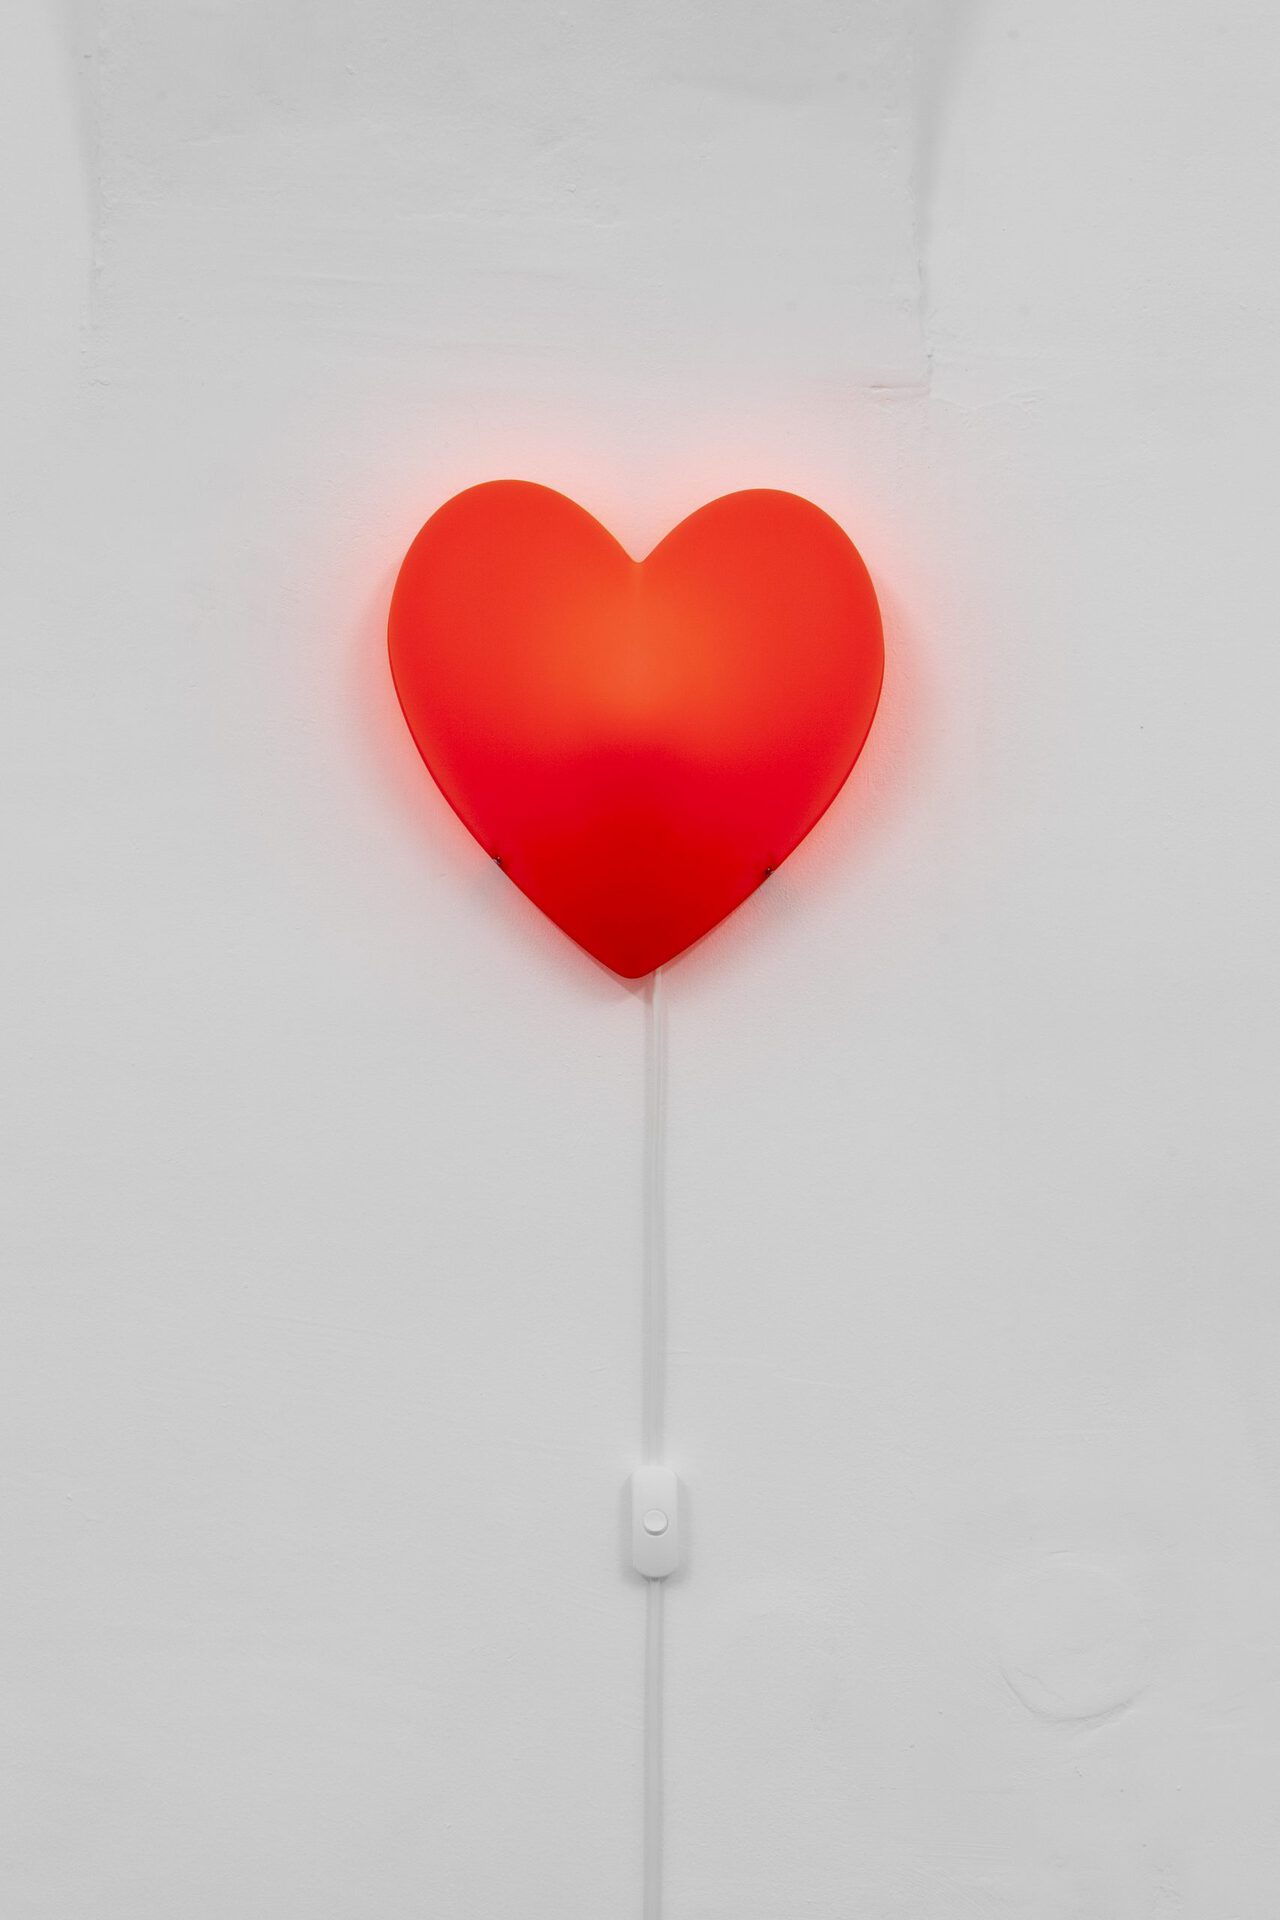 Bob Schatzi, ❤️, 2020, Mirror foil, LED light bulb, Ikea wall lamp, 27cm x 27cm x 8cm